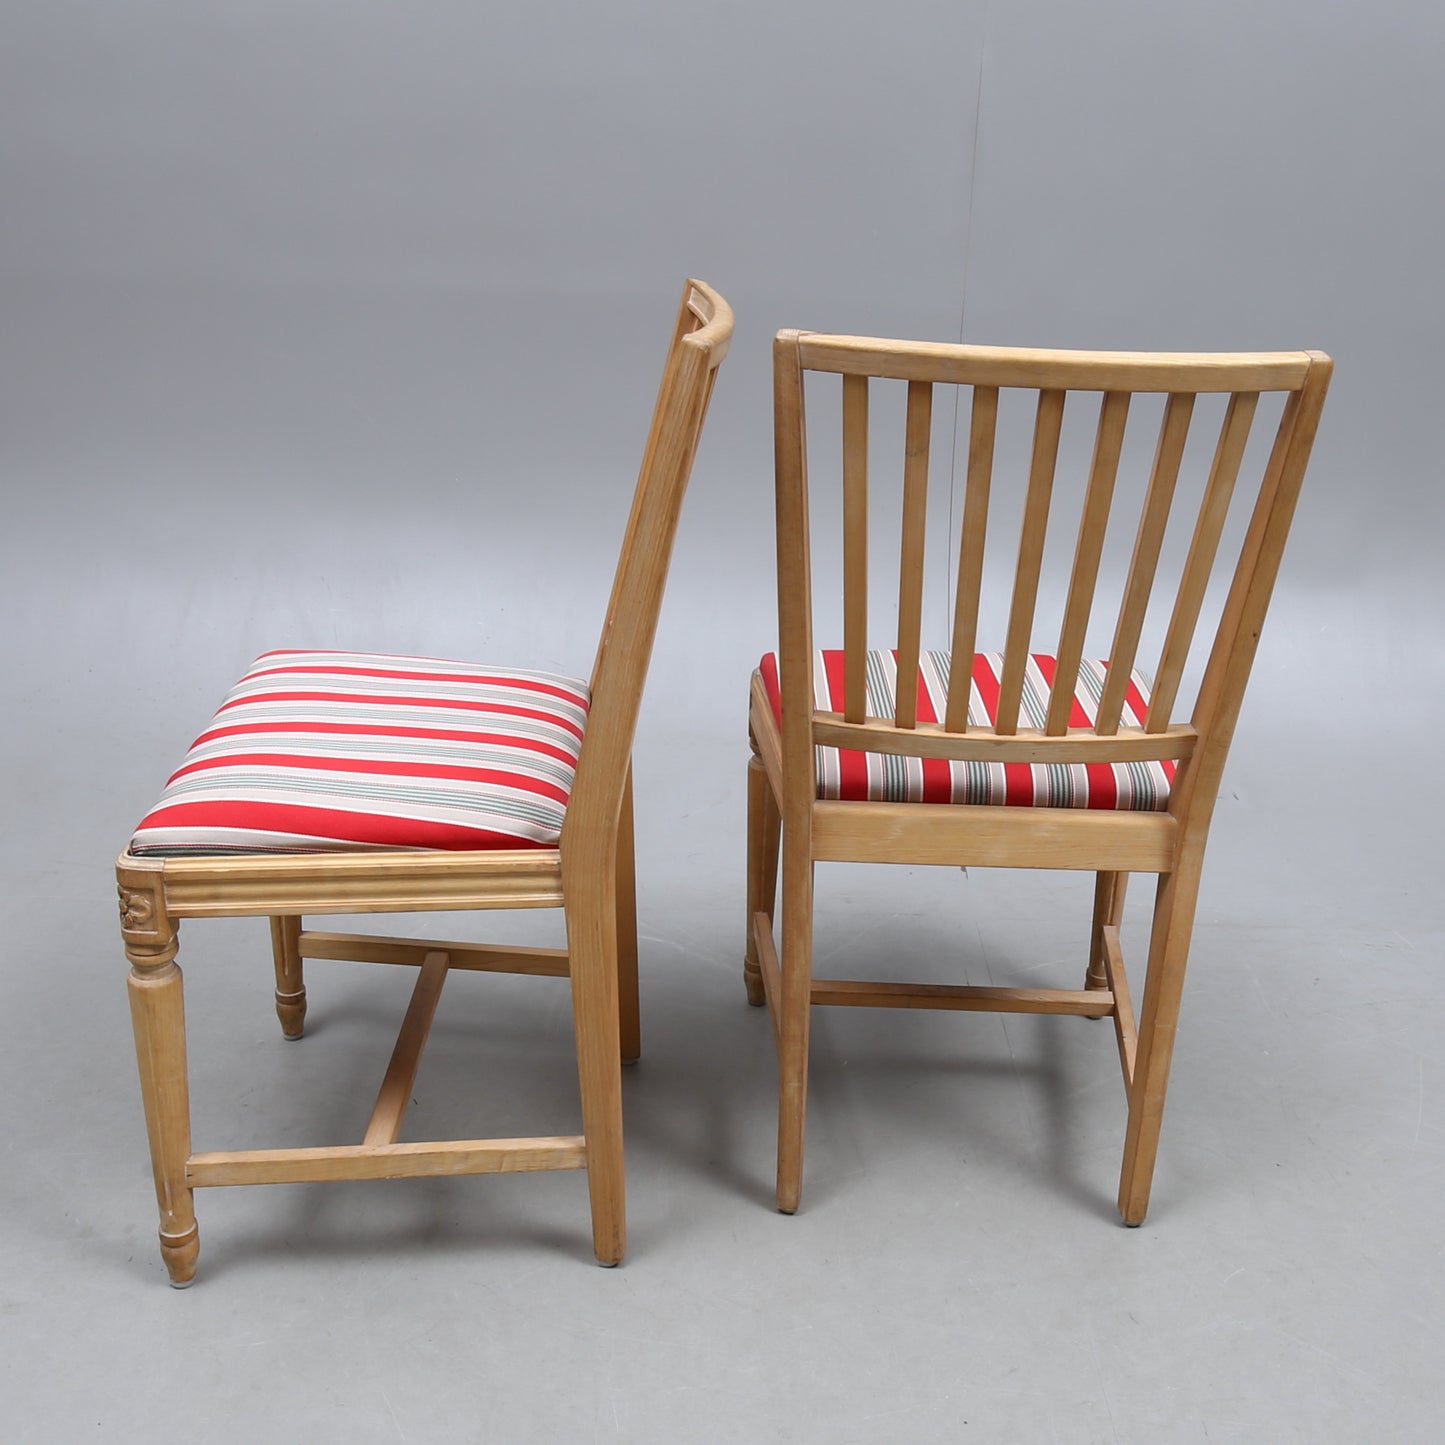 Swedish Classic Leksand Chair